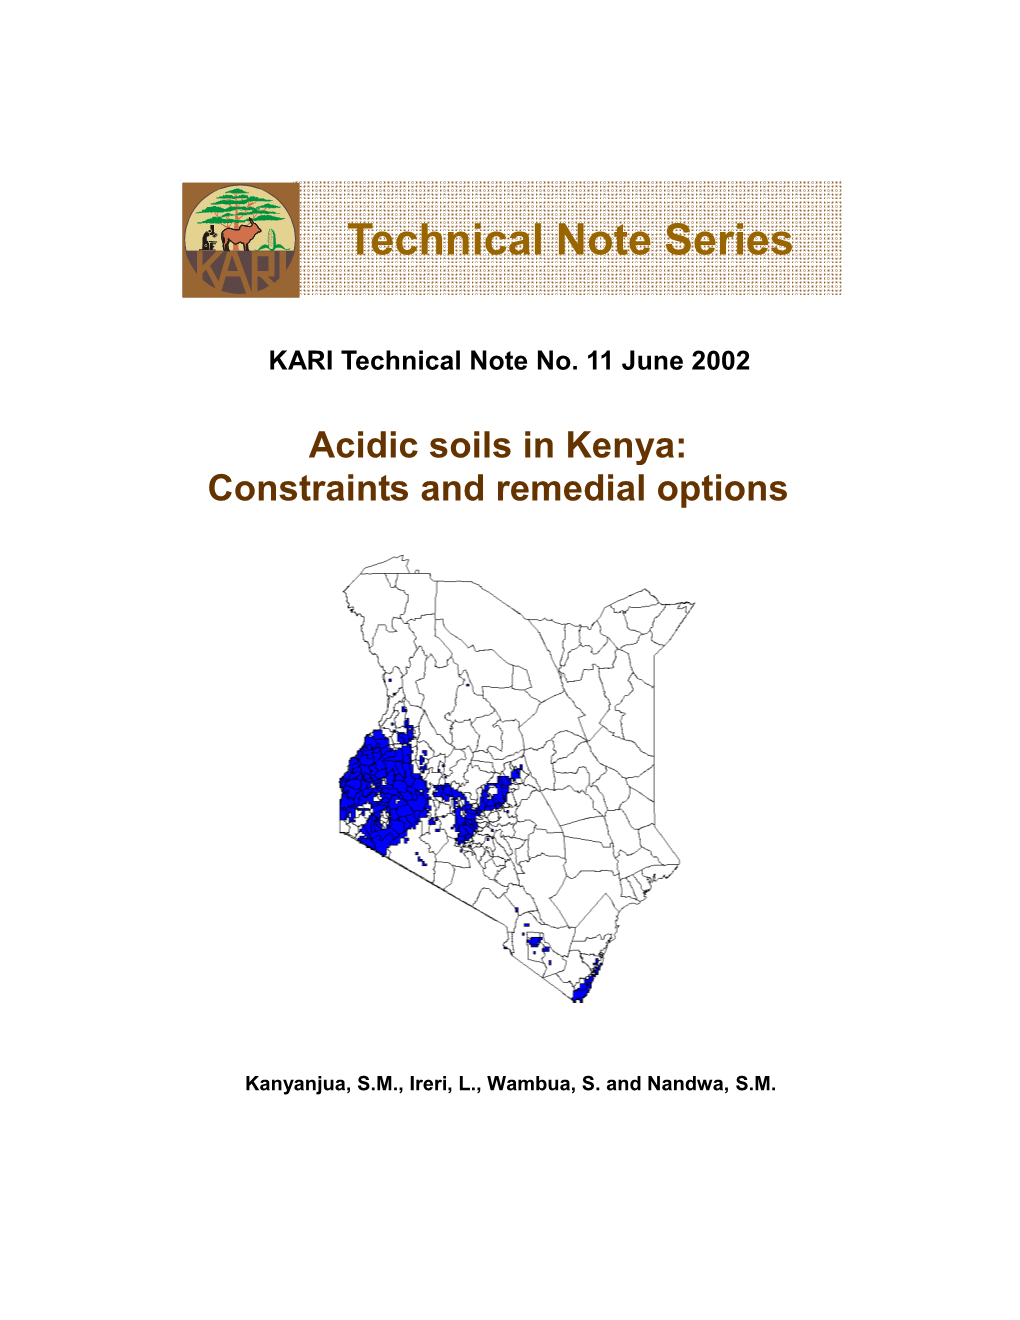 Acidic Soils in Kenya: Constraints and Remedial Options